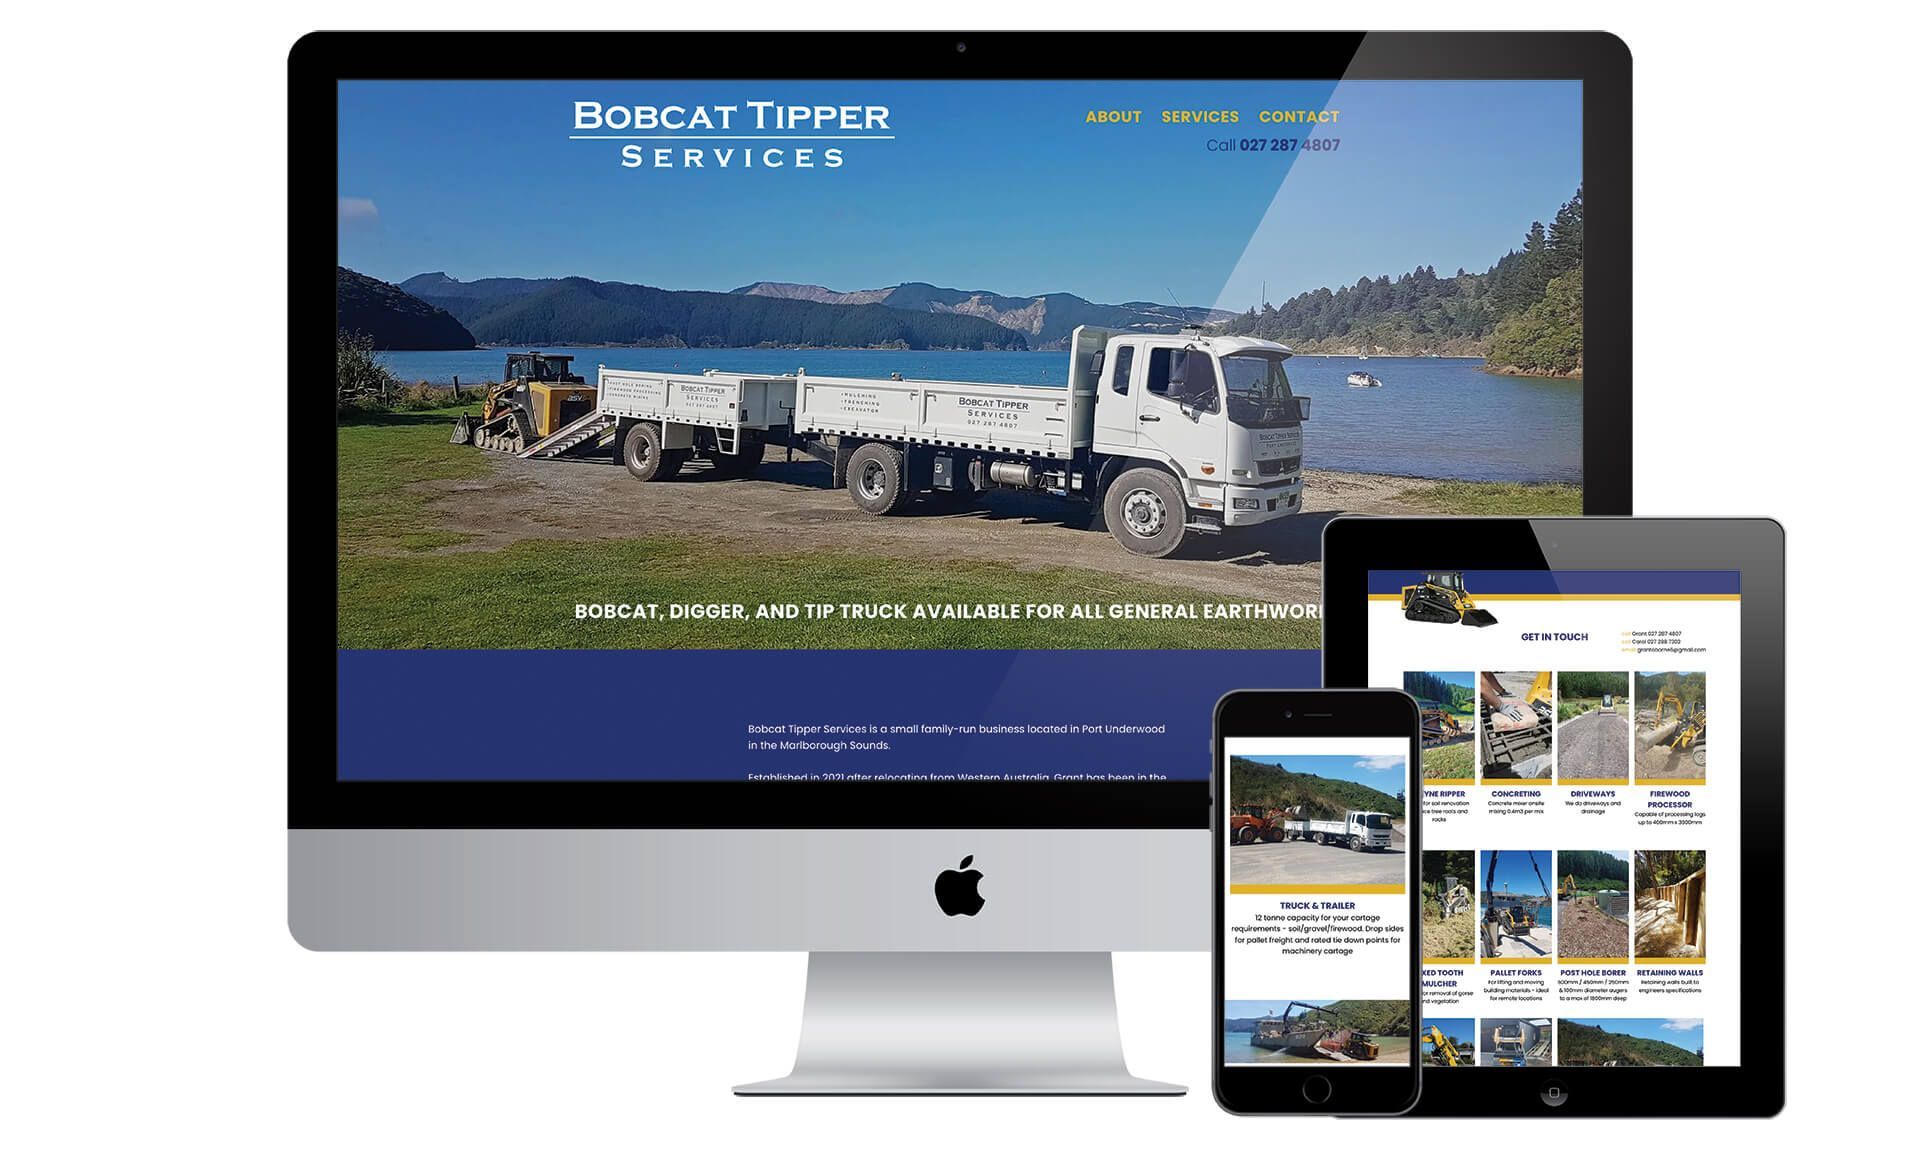 Bobcat Tipper Services website designed by Vanilla Hayes creative graphic design  studio in Blenheim, Marlborough, New Zealand